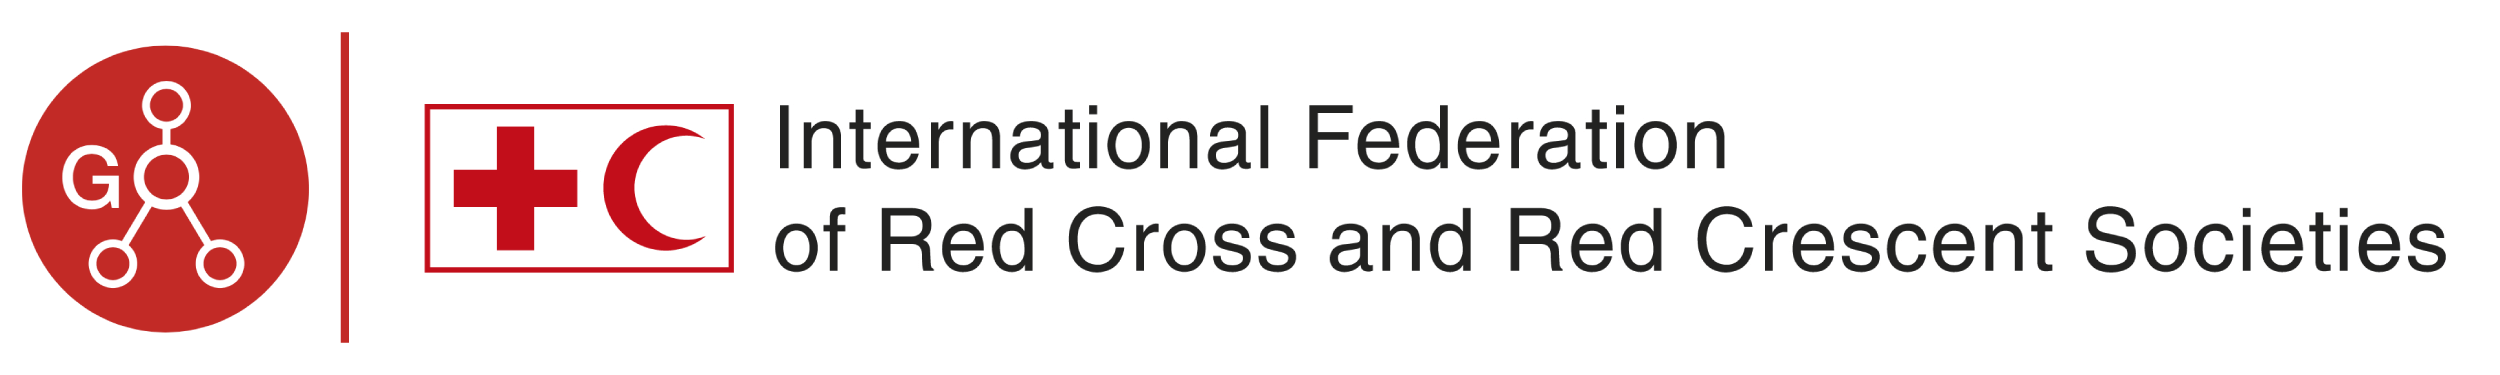 Ifrc Logo - IFRC Go